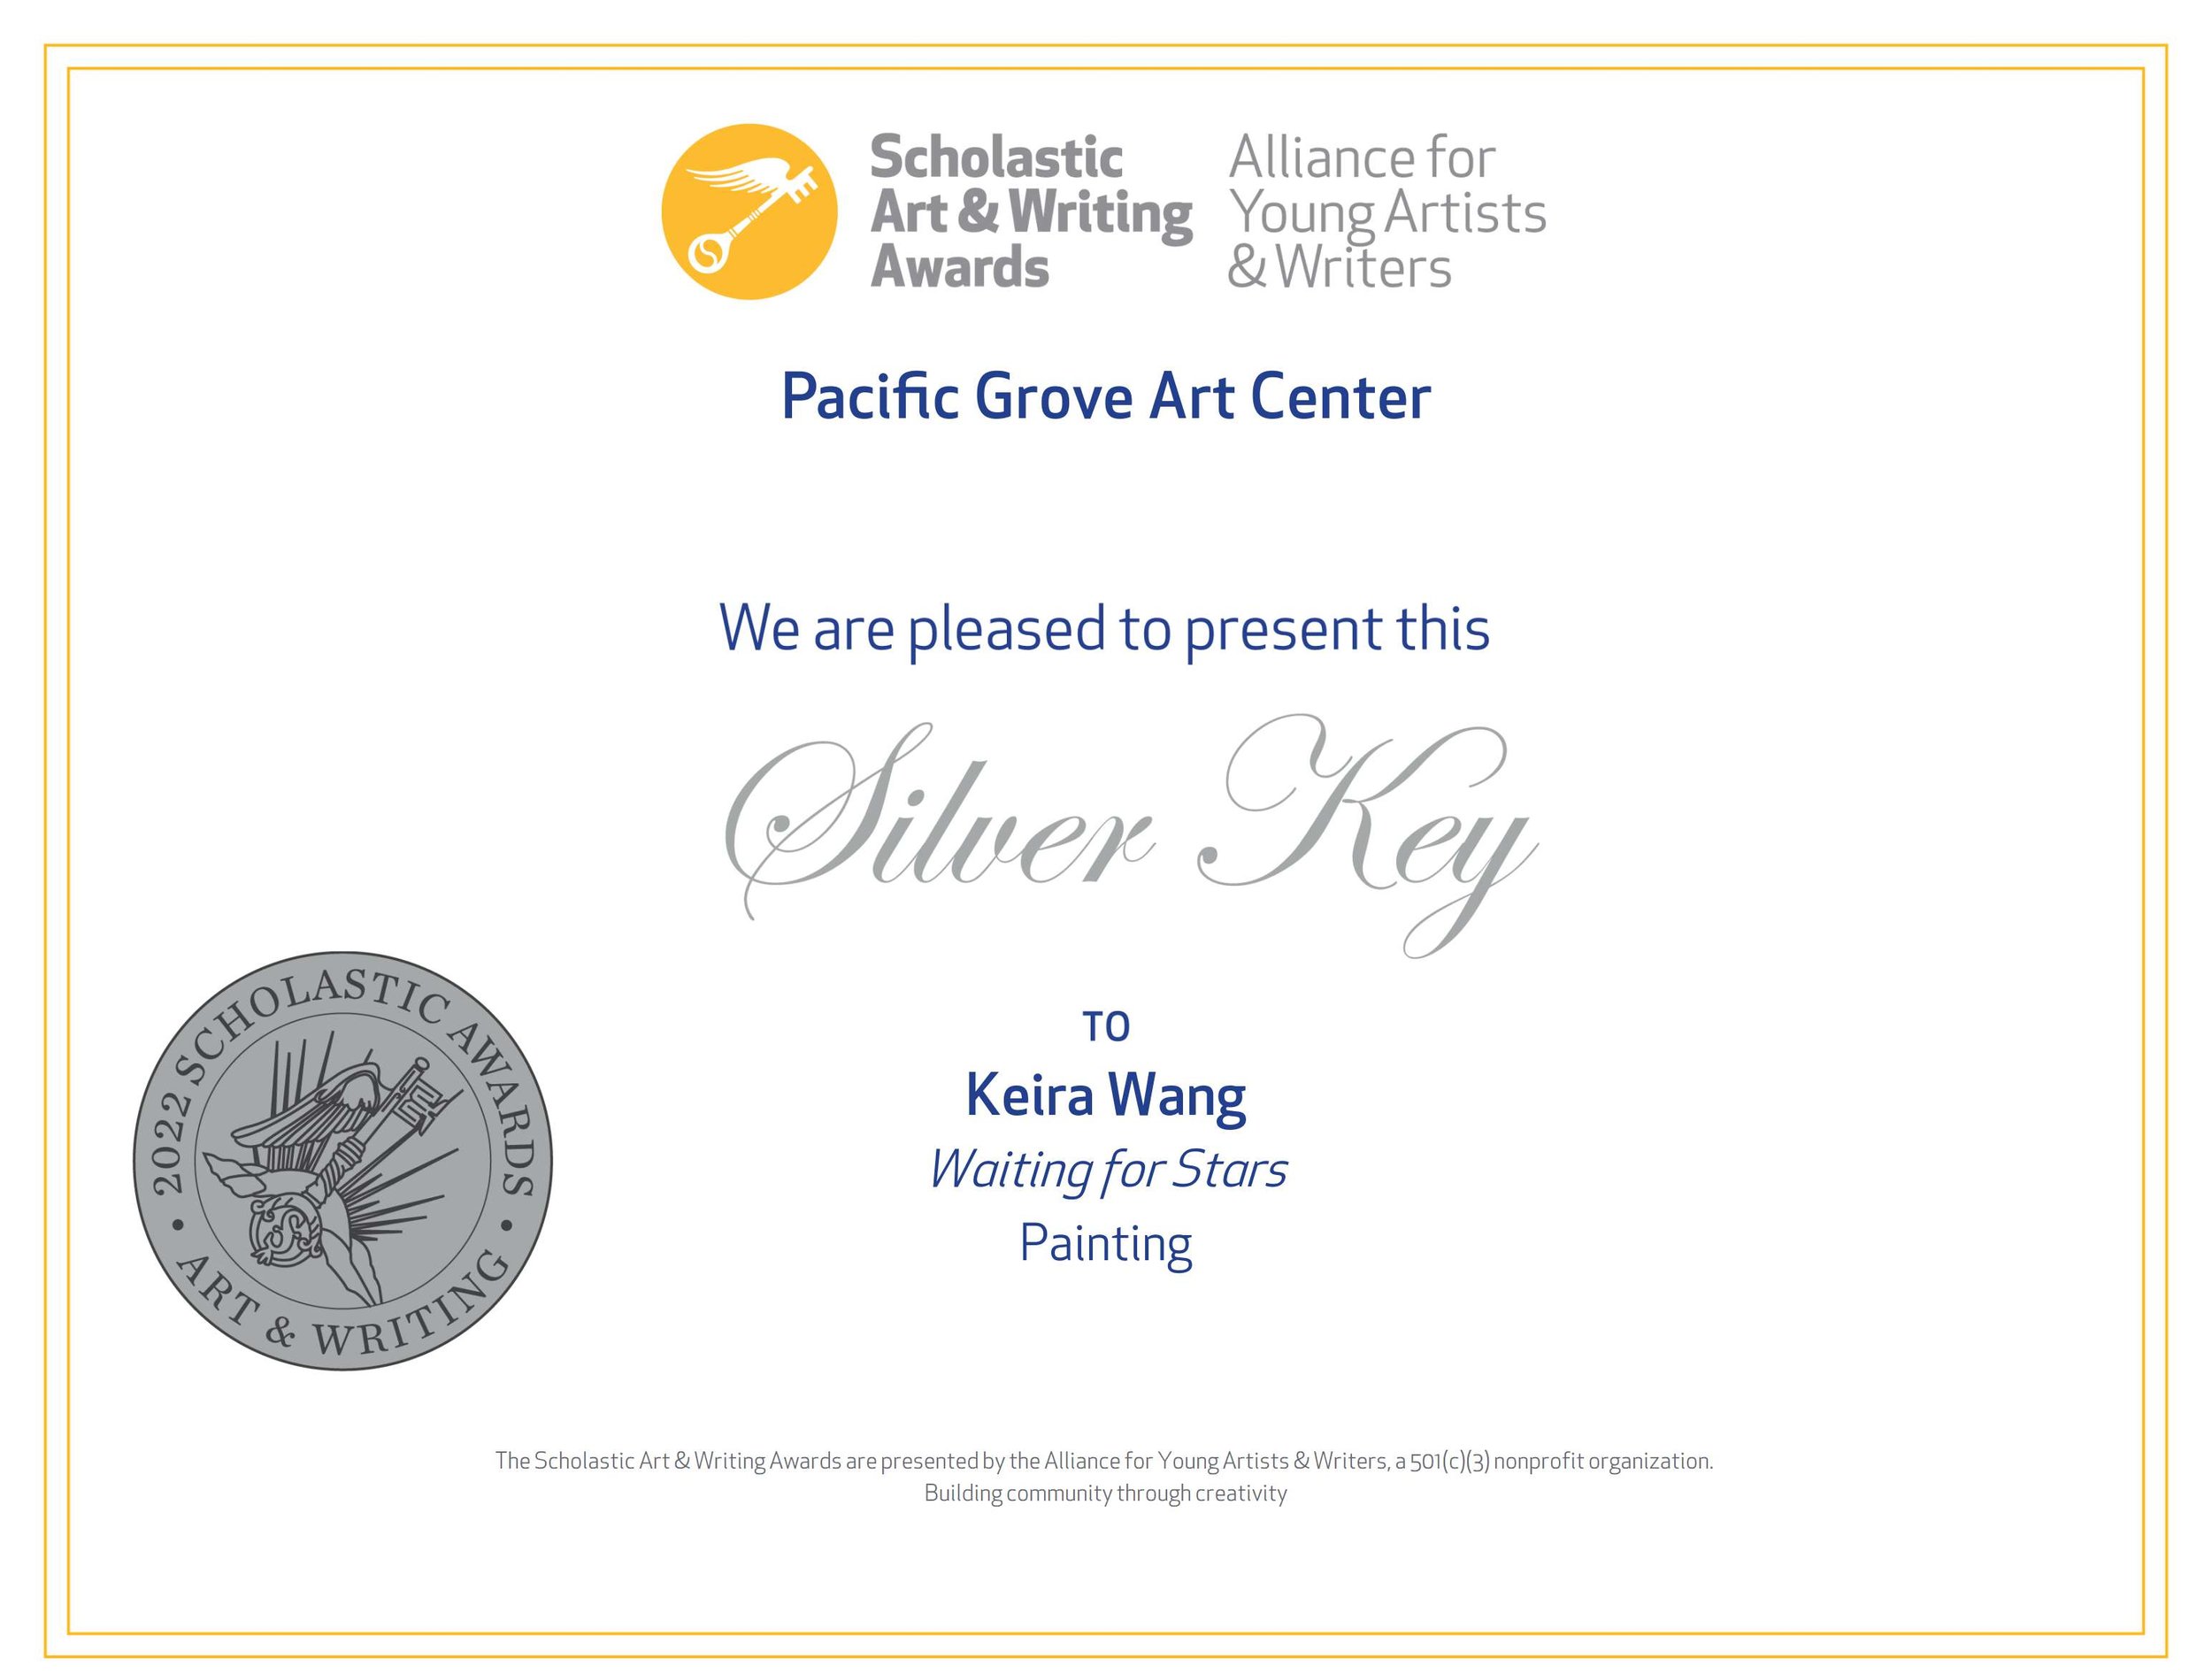 award_certificate_work_14197806_Silver_Key_Wang_Keira.jpeg